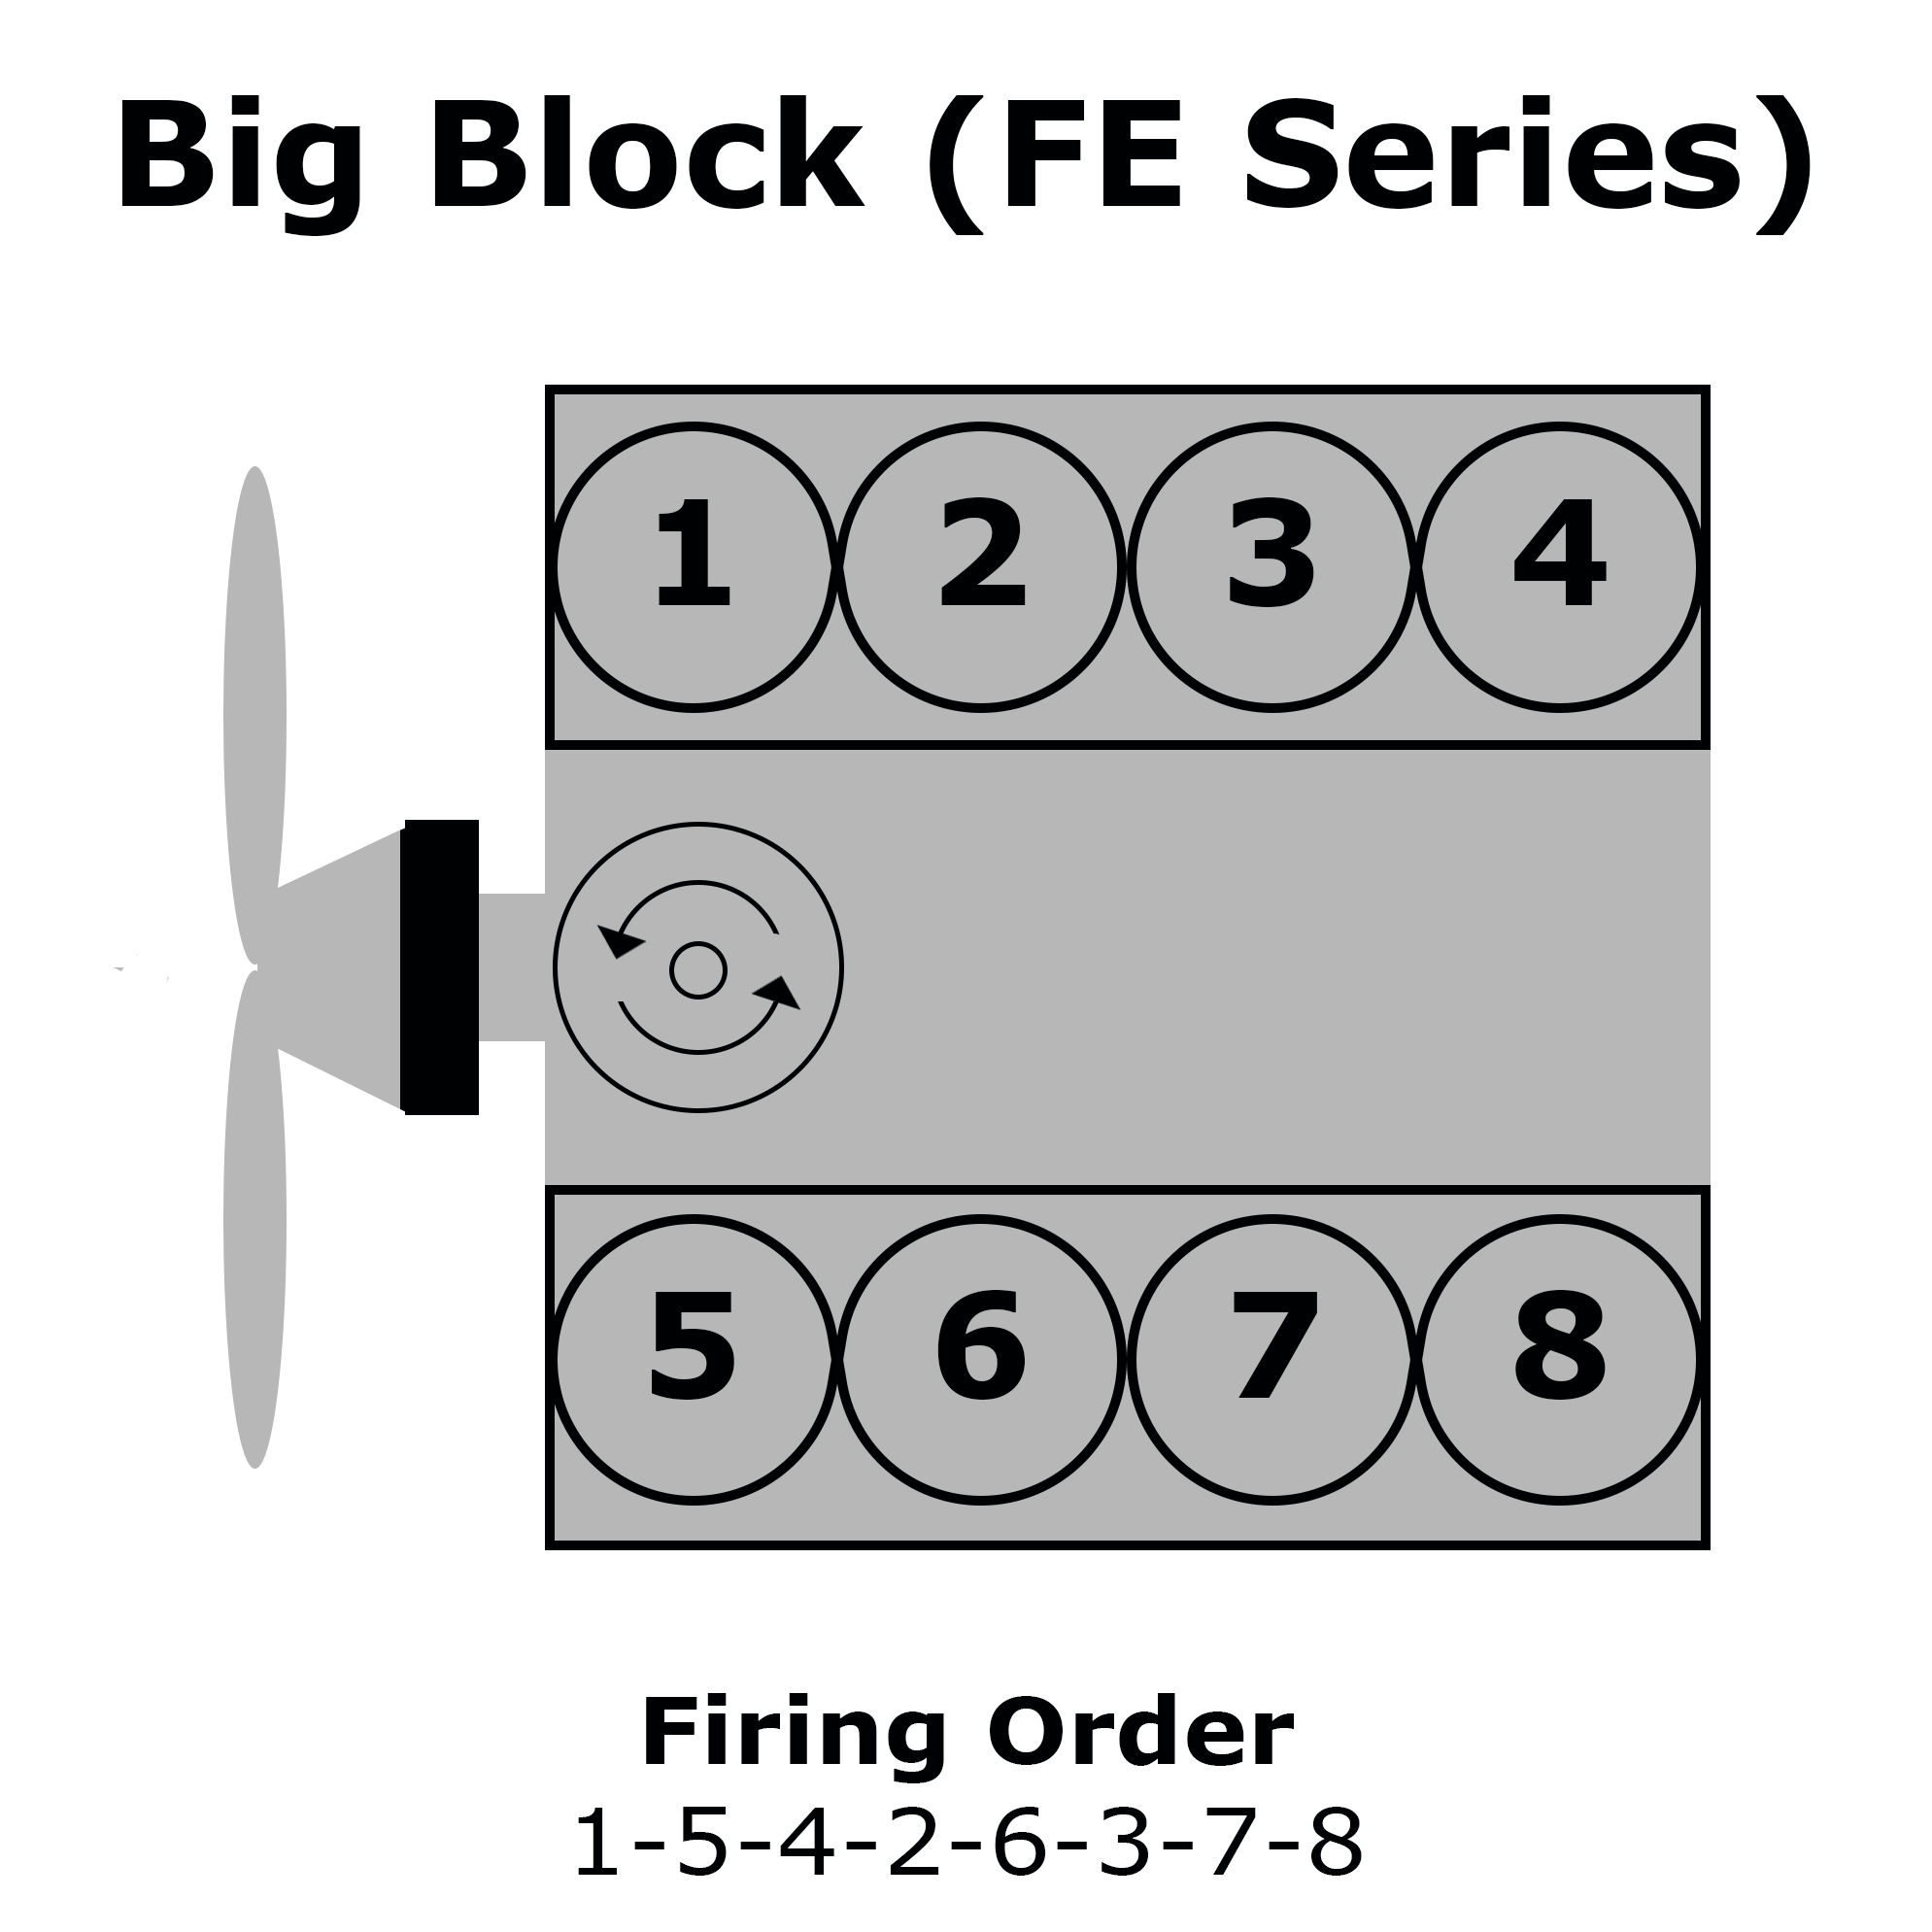 Ford Big Block (Fe) Firing Order